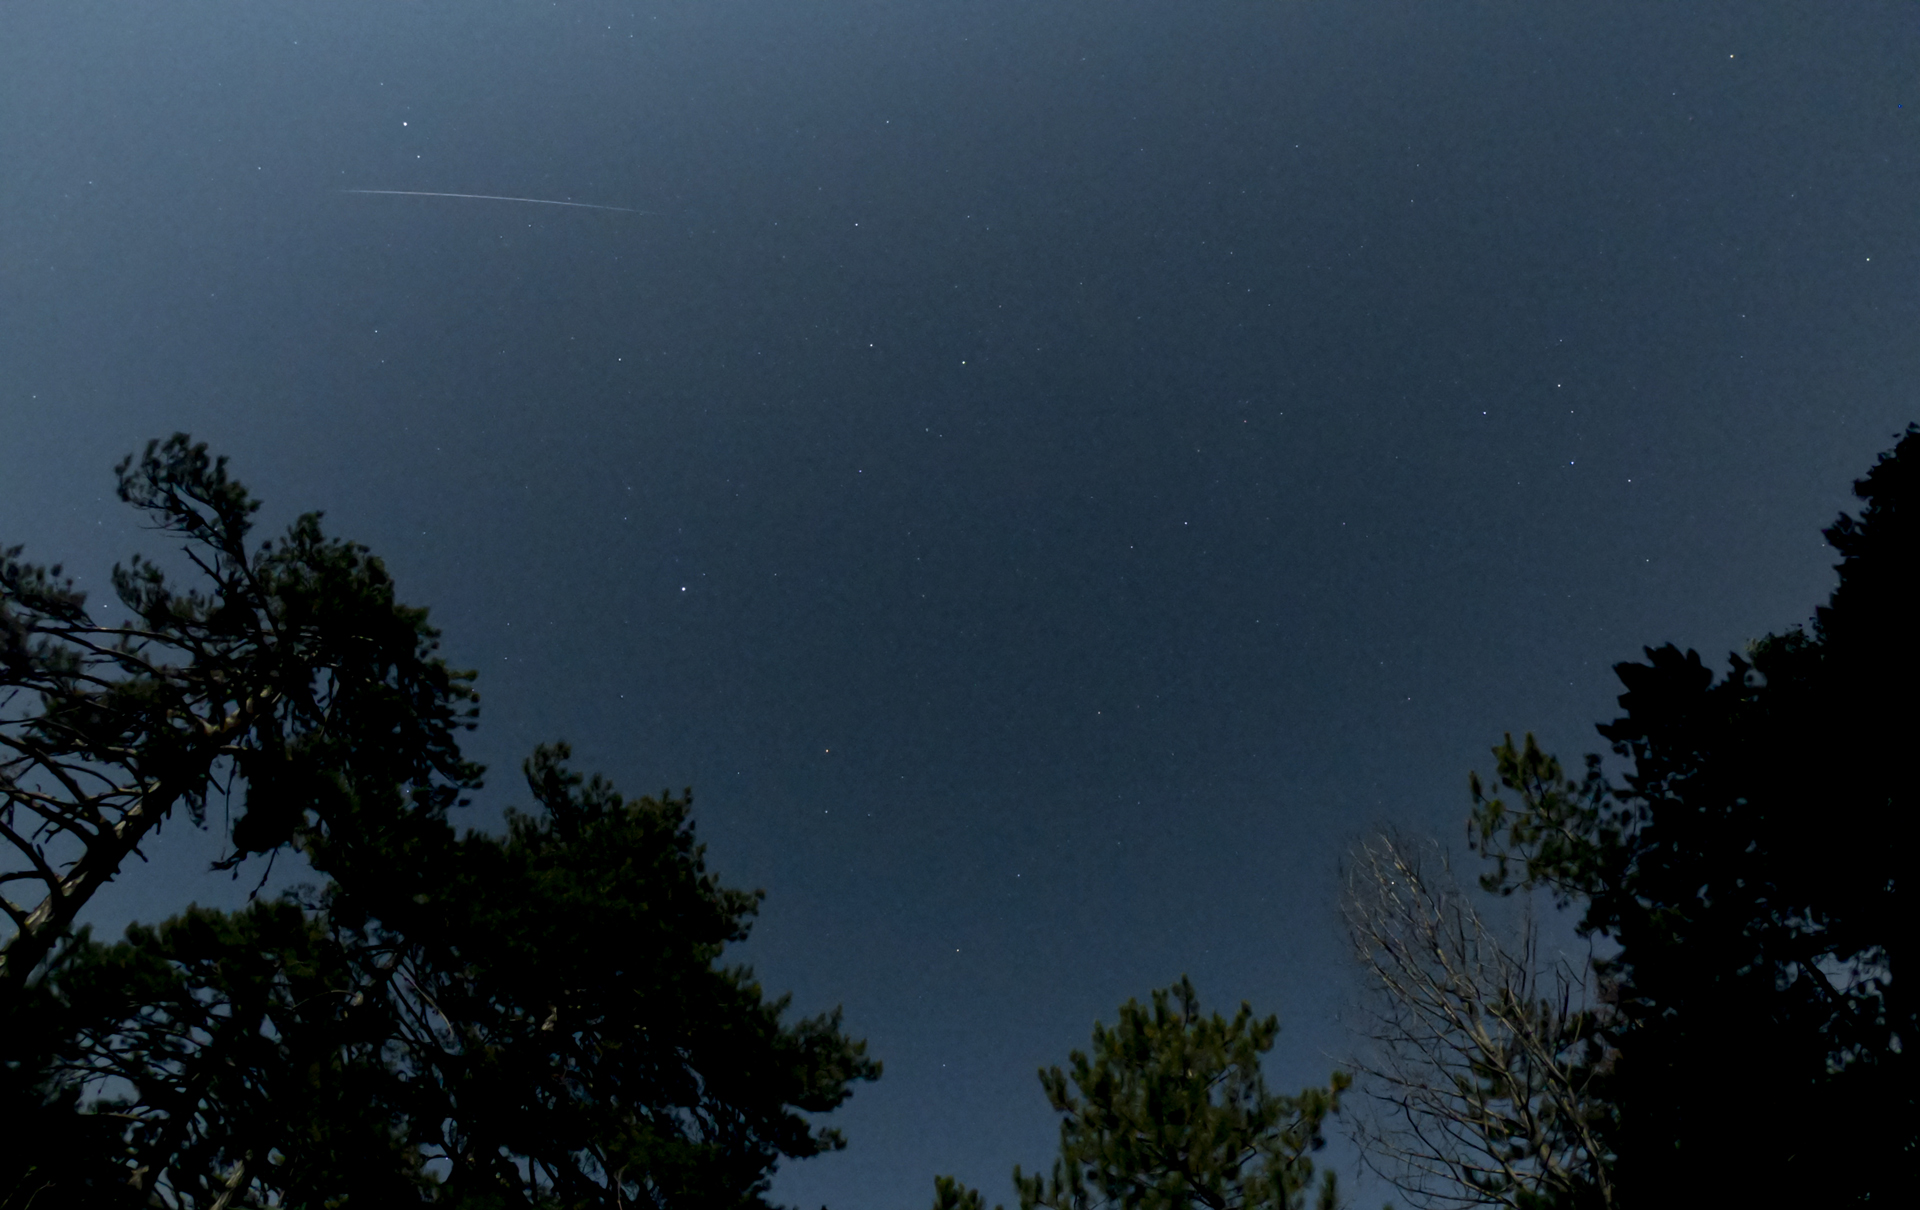 A faint Perseid meteor over trees in Turkey.